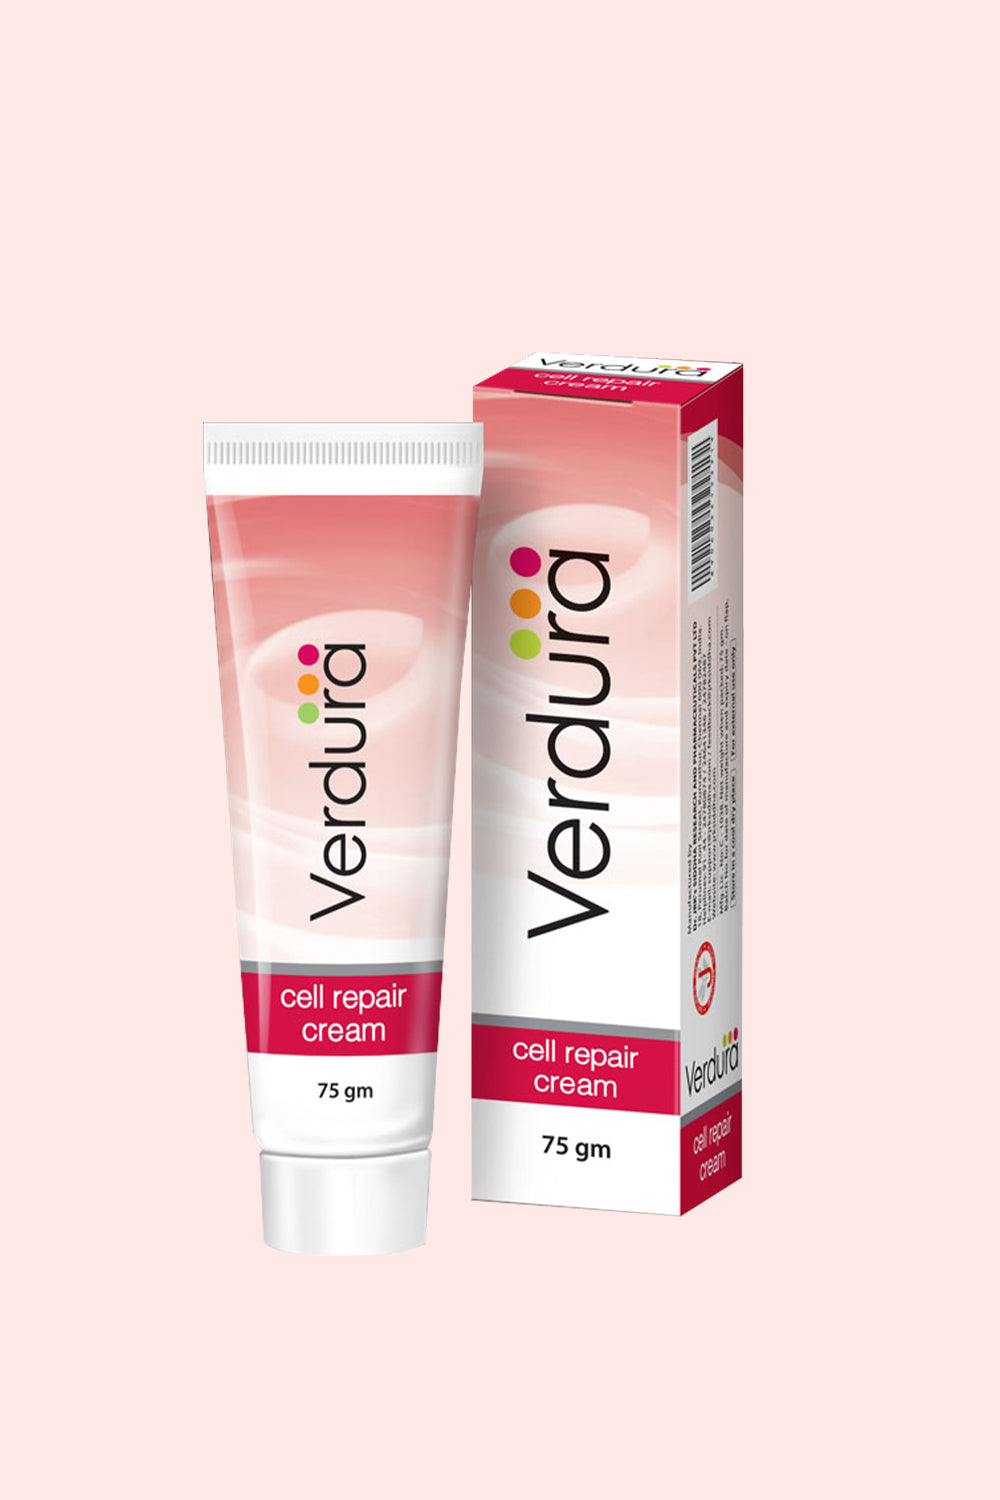 Verdura cell repair cream 75 gm pack of 2